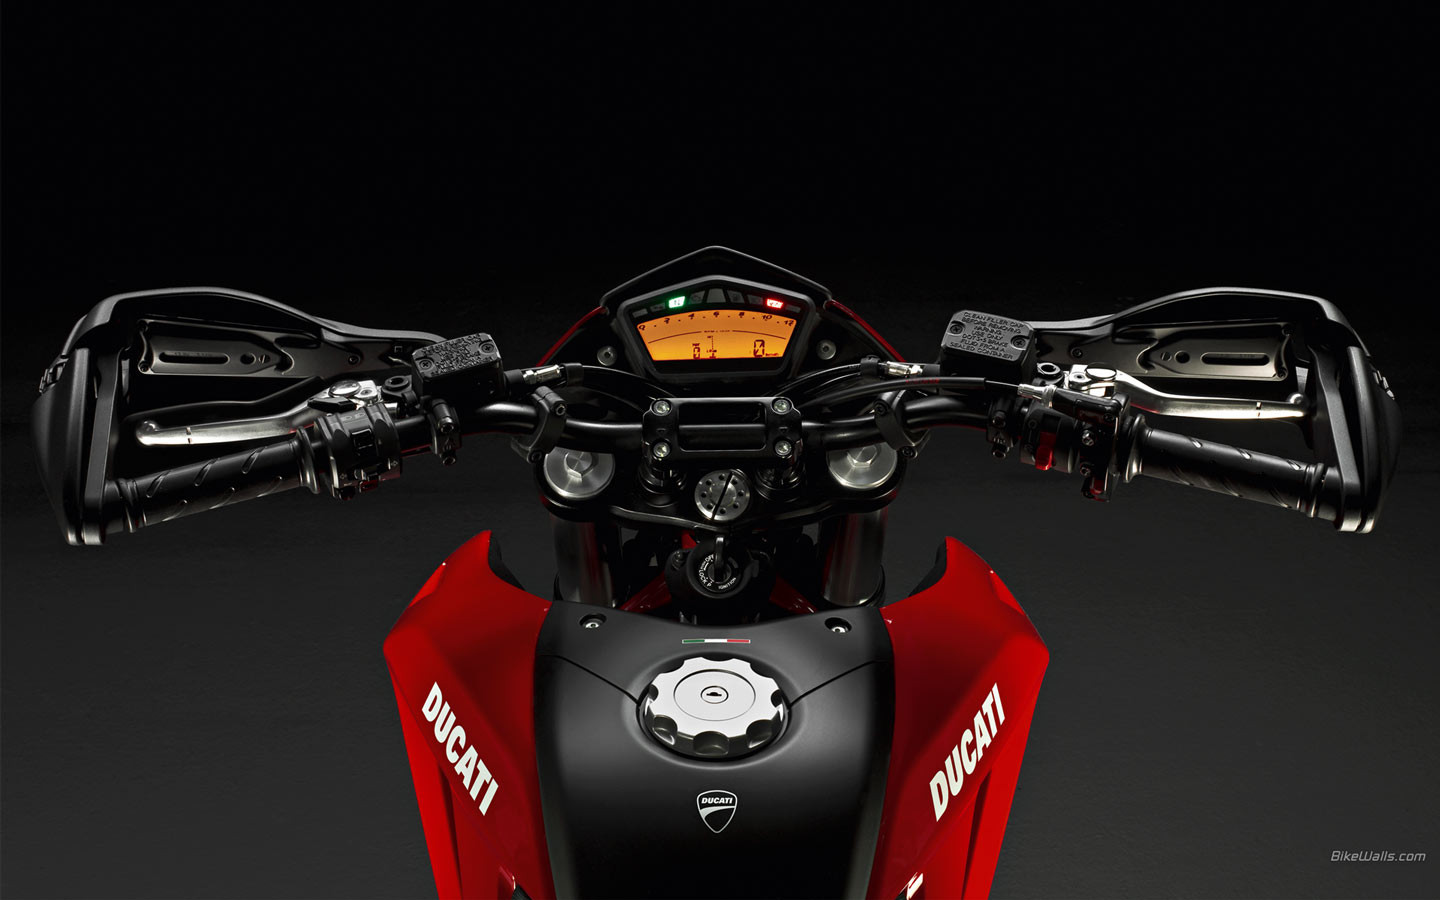 Ducati_Hypermotard_796_2010_09_1440x900.jpg